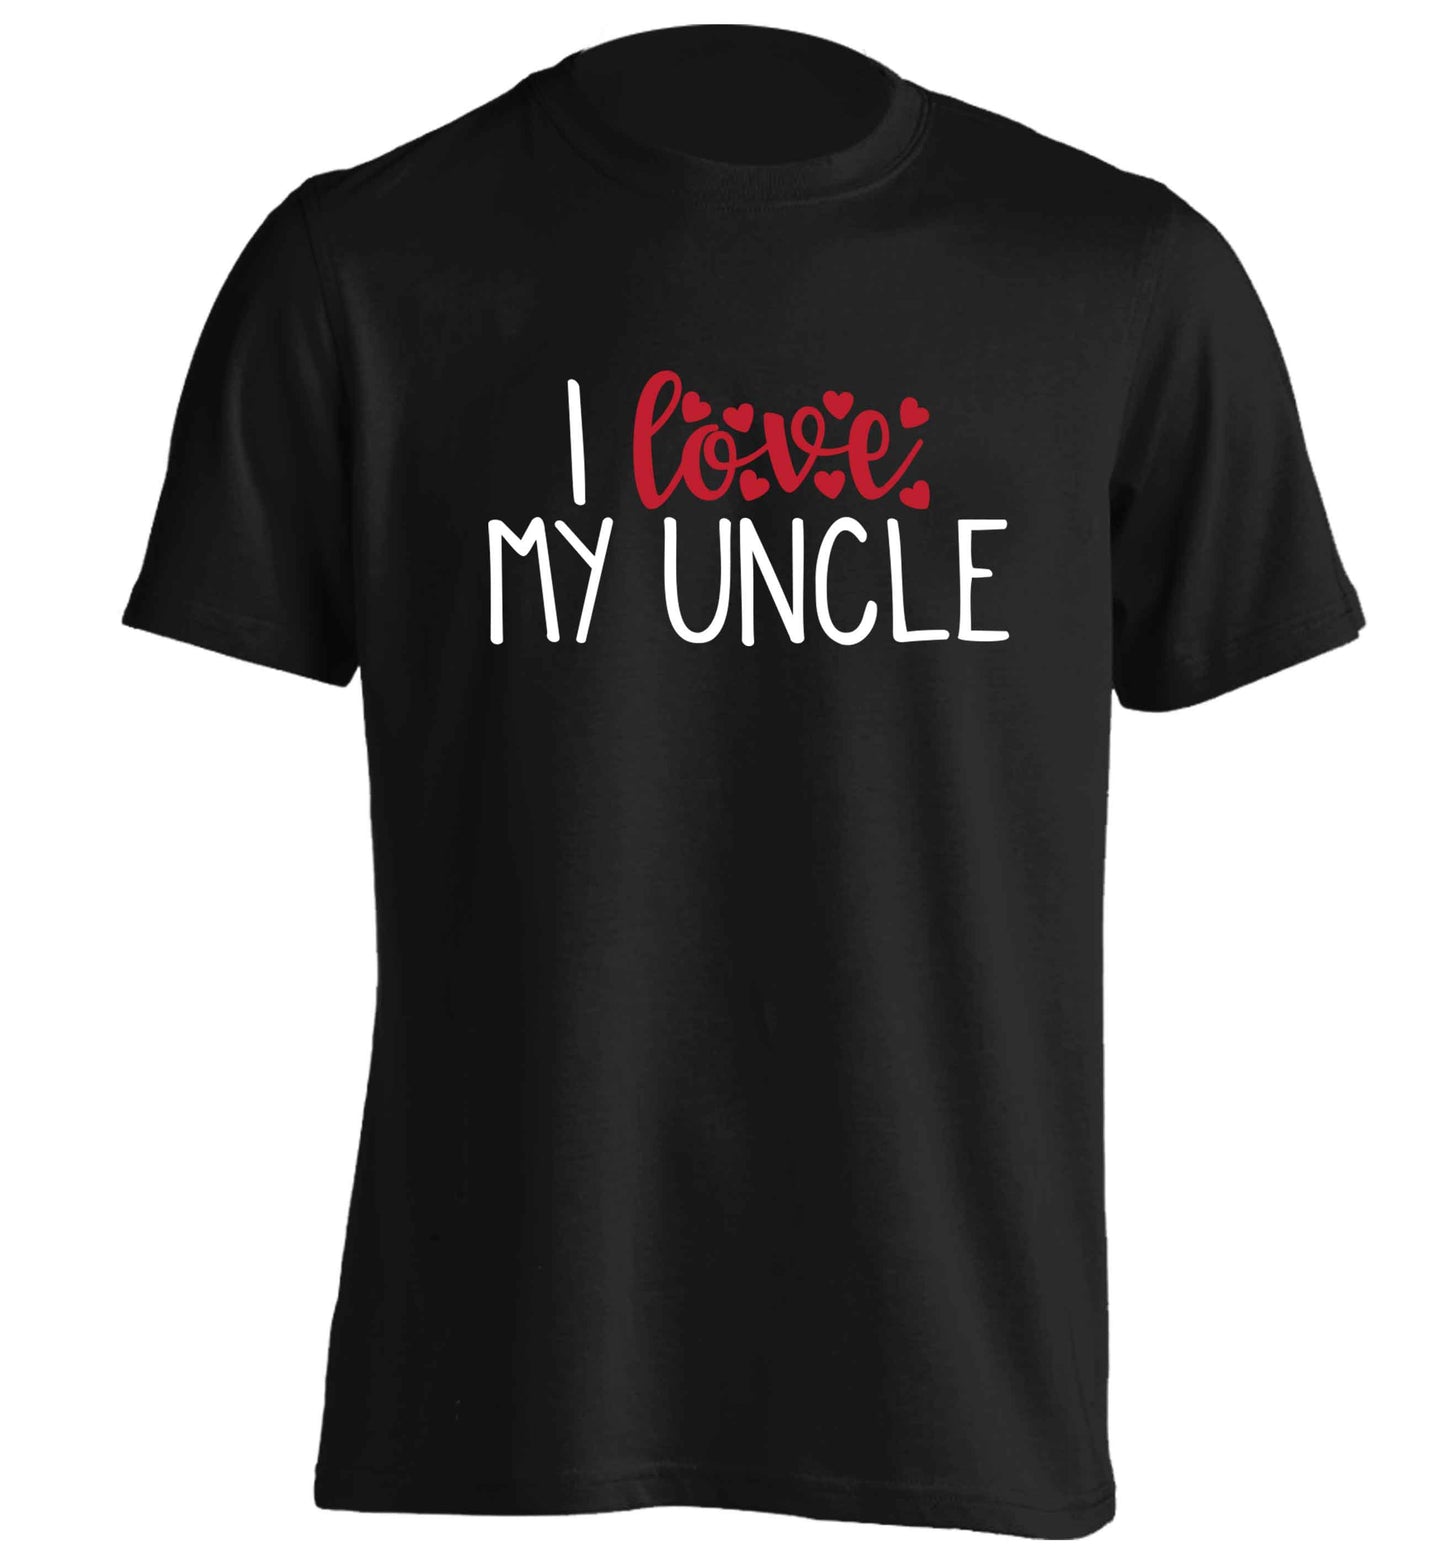 I love my uncle adults unisex black Tshirt 2XL